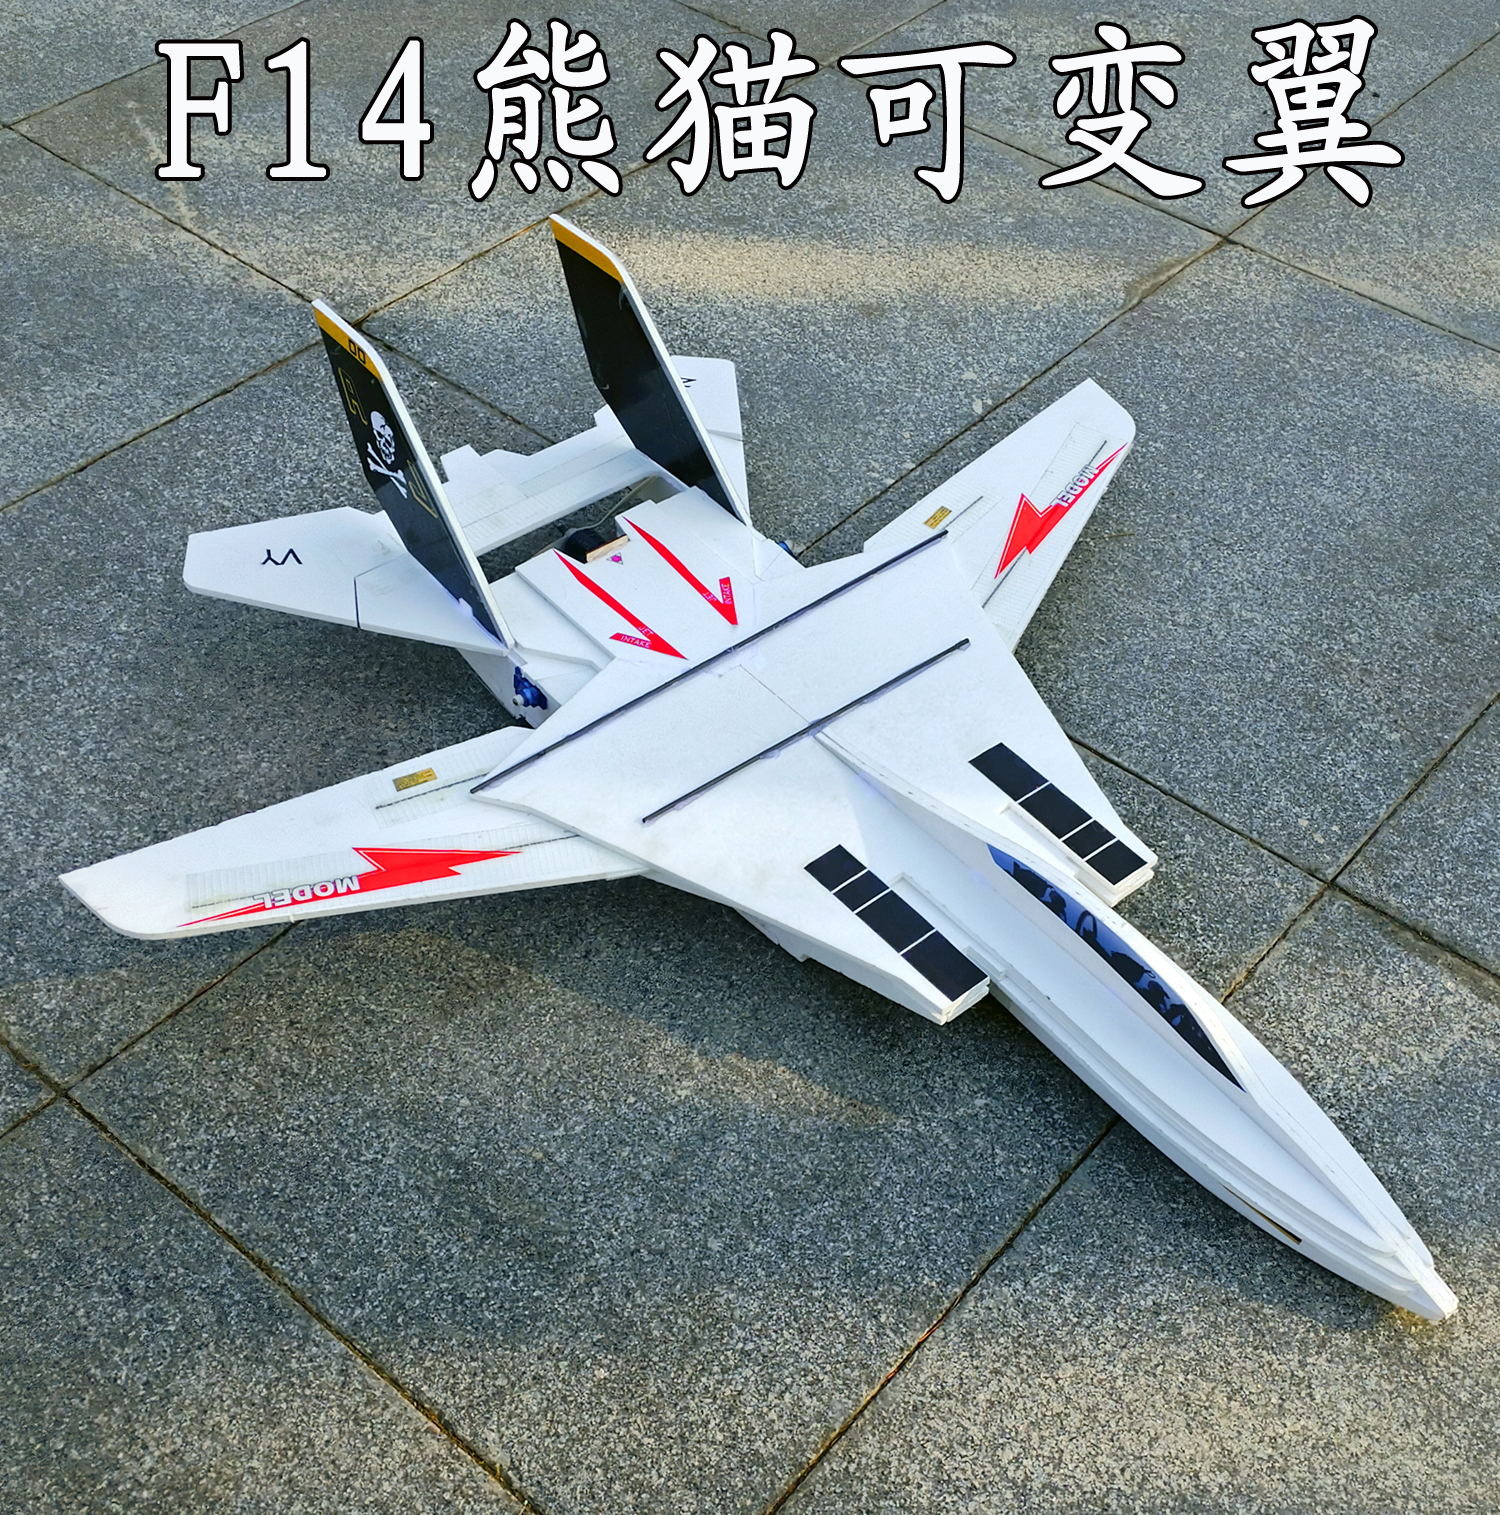 F14可变翼固定翼航模kt板、耐摔魔术板pp板战斗机电动遥控航模飞